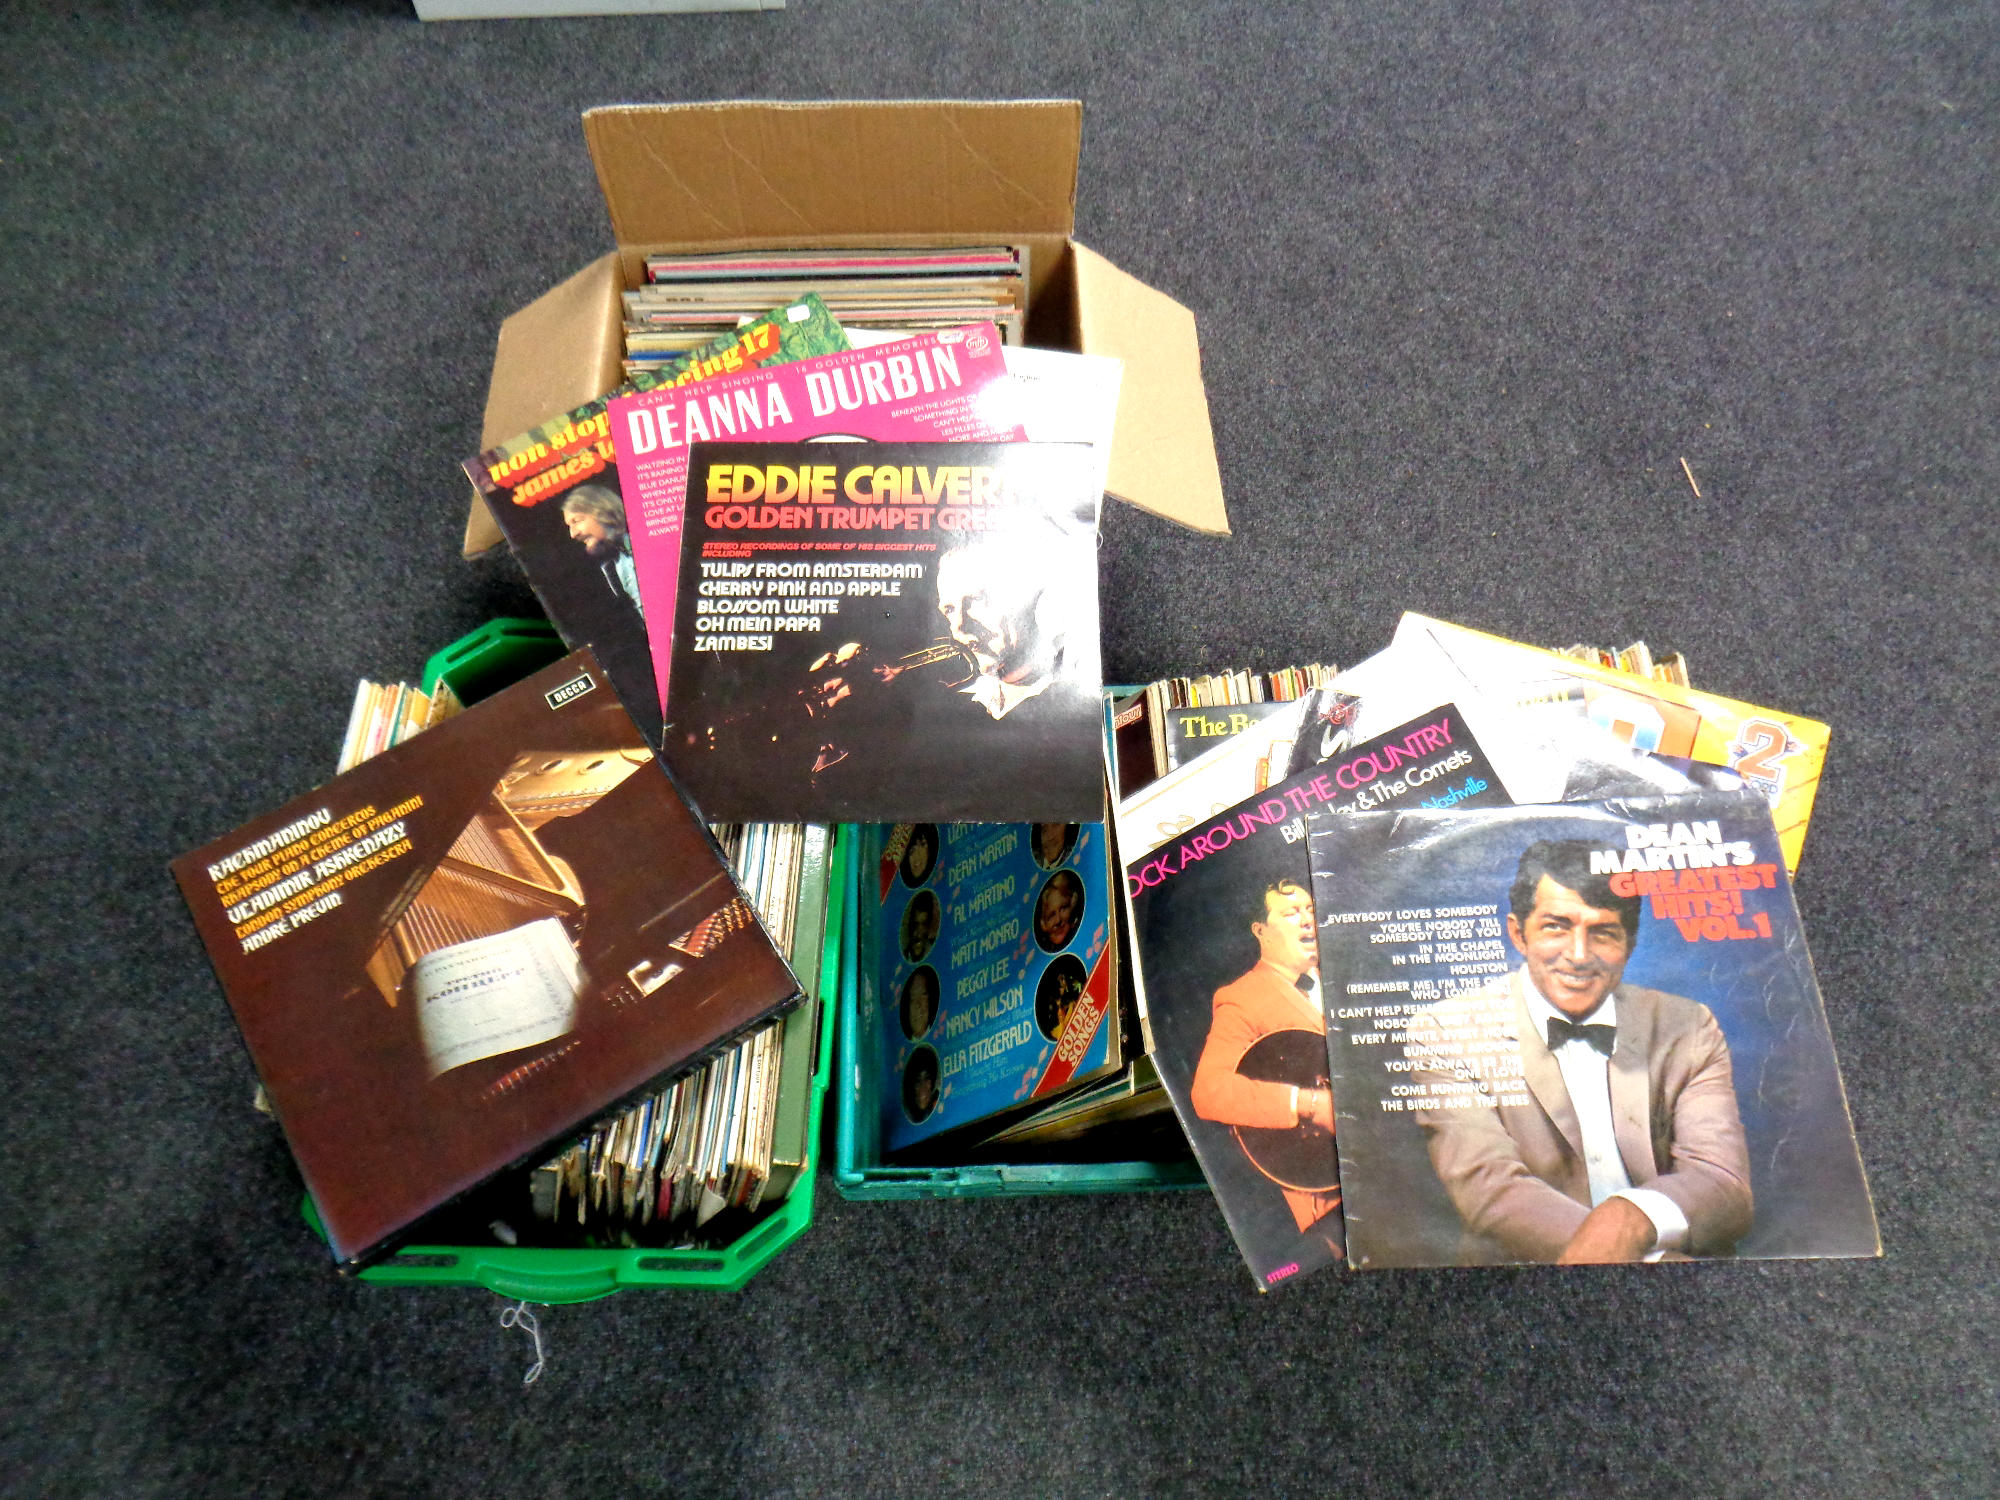 Two crates containing vinyl LP records